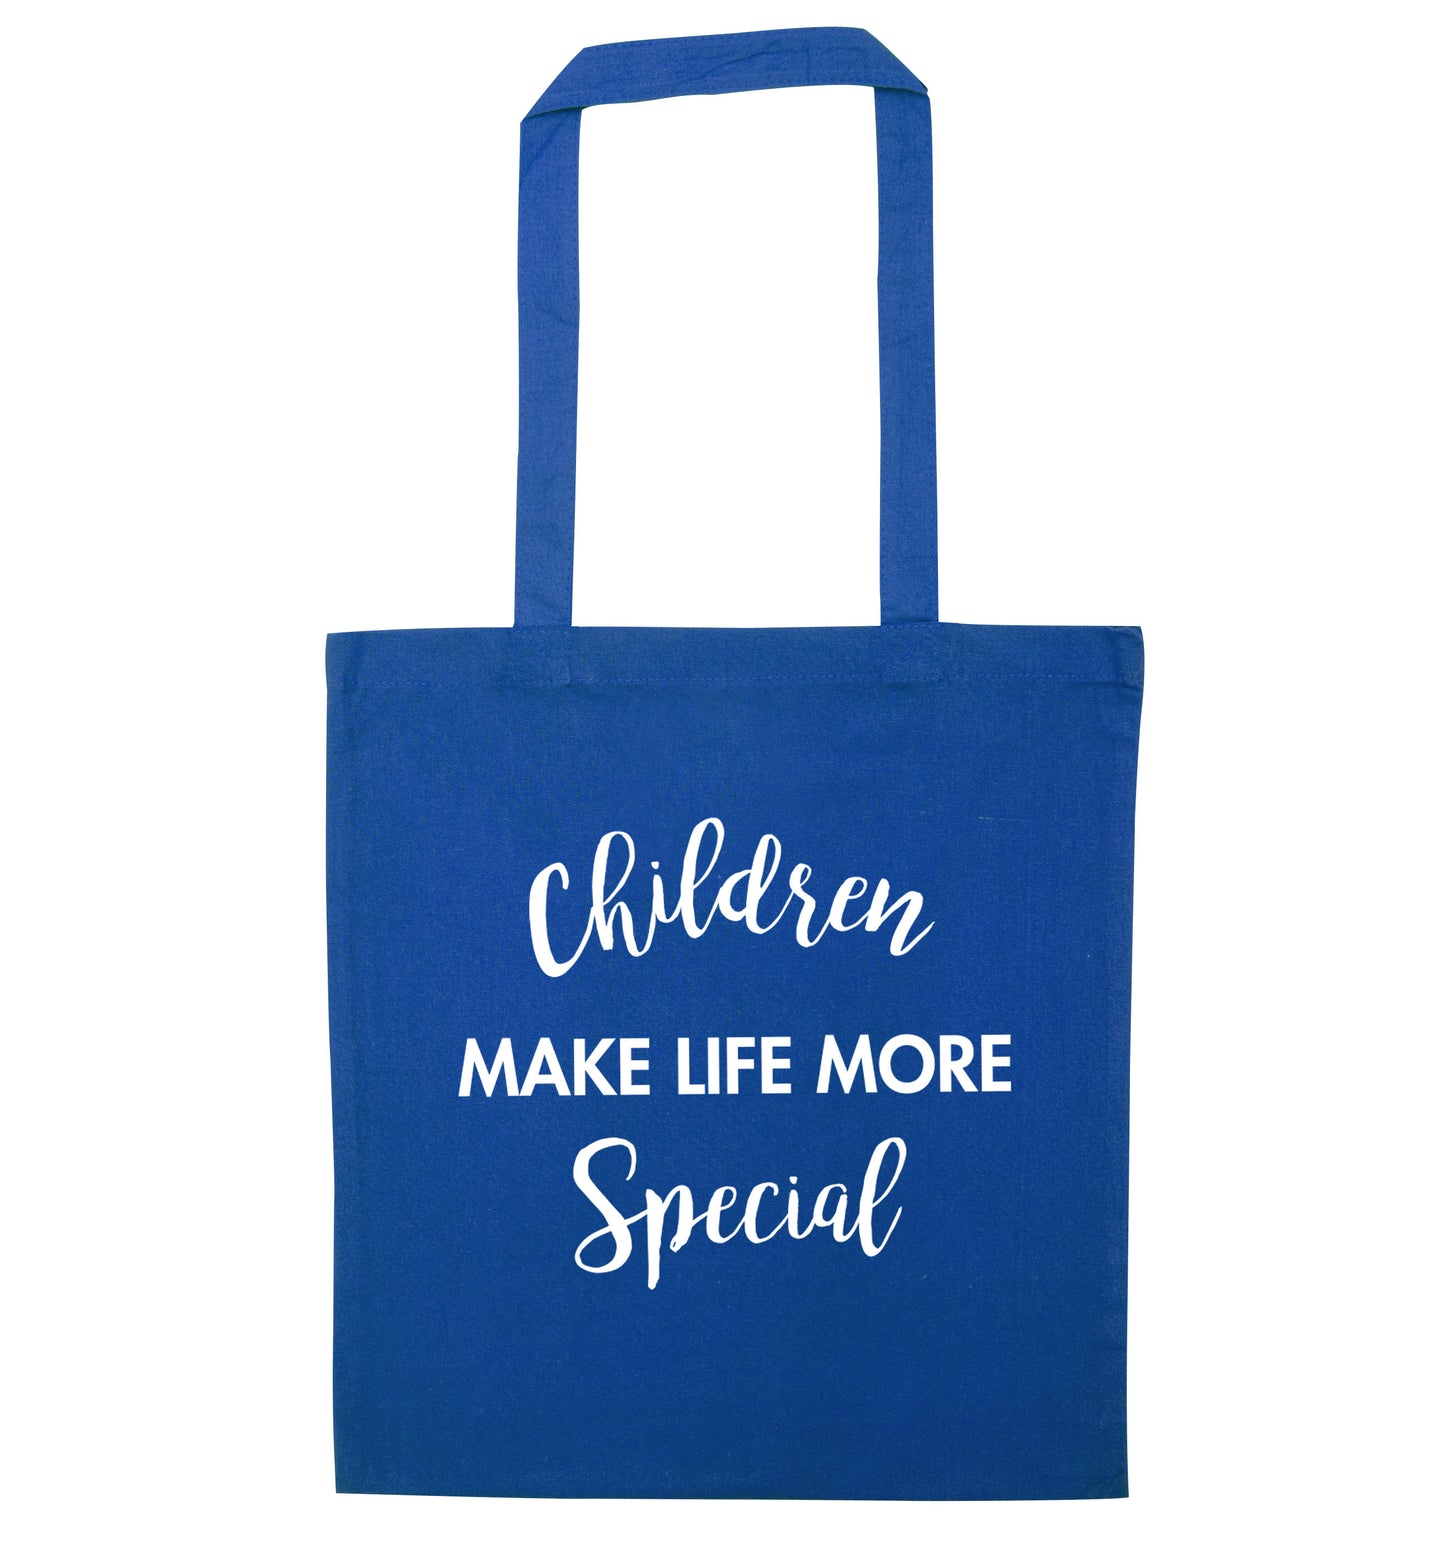 Children make life more special blue tote bag